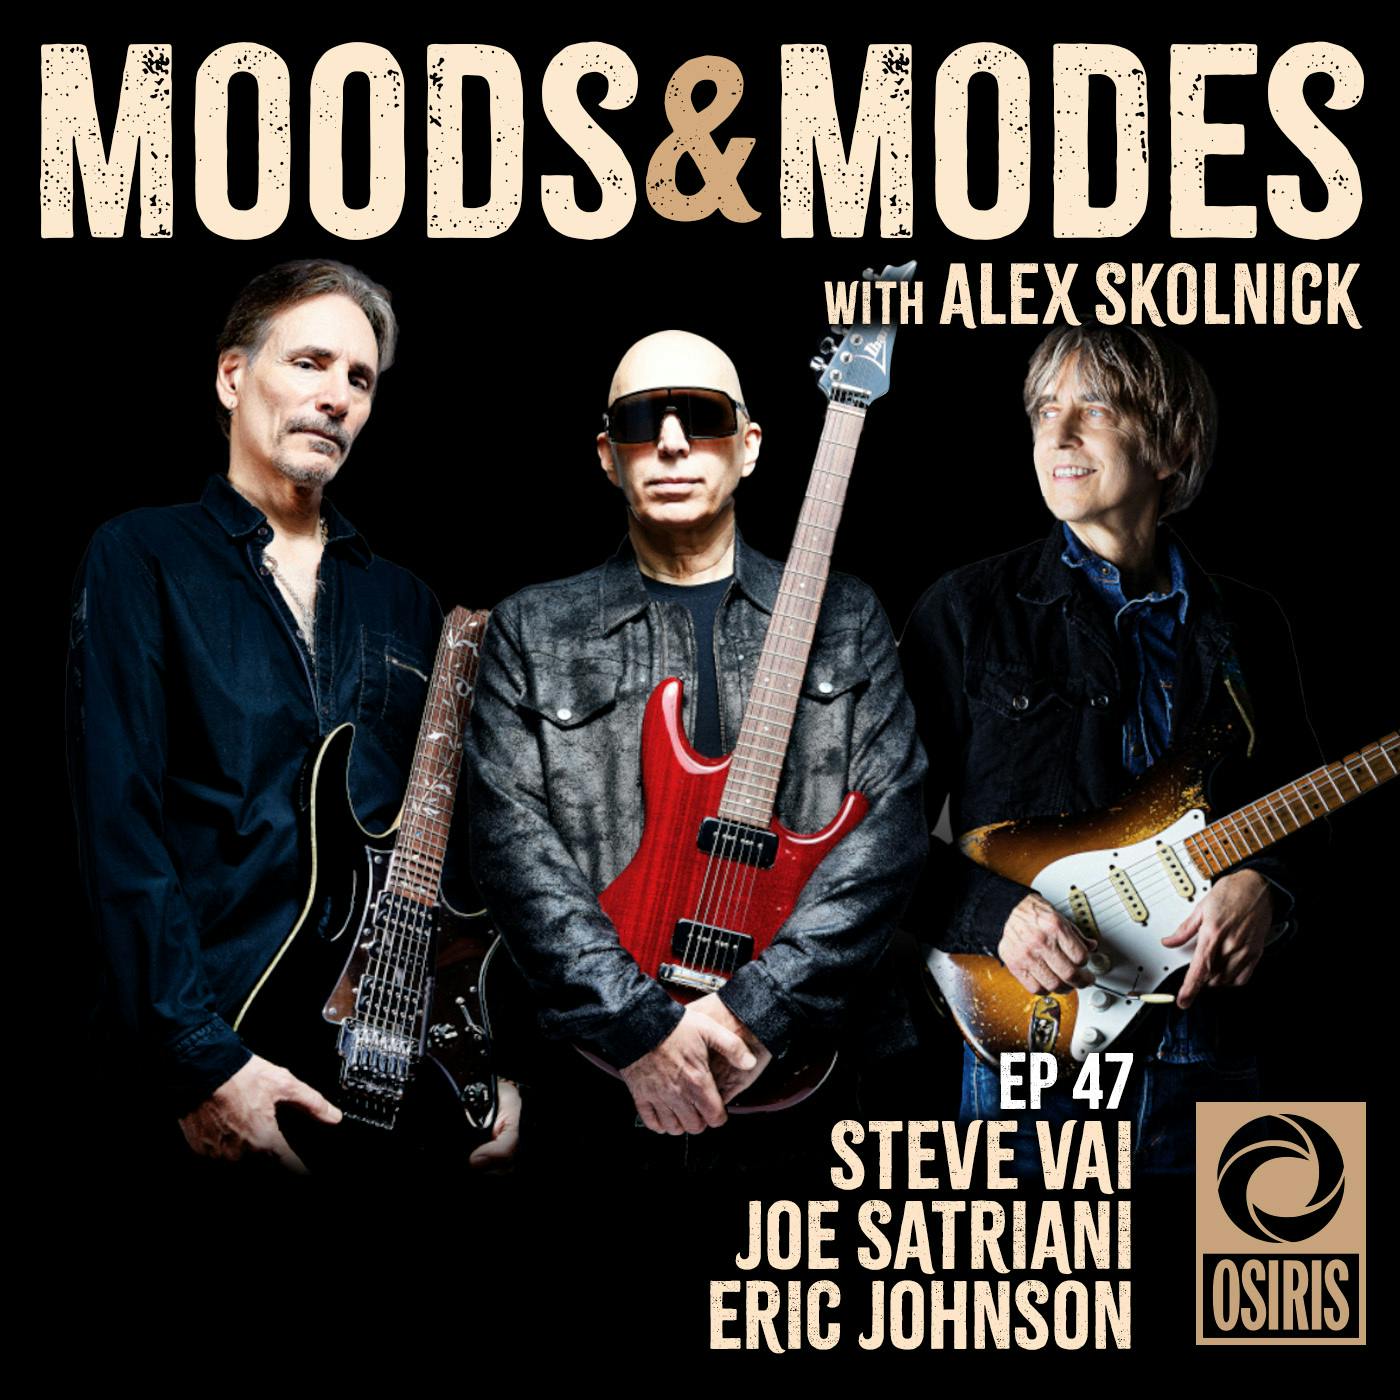 Joe Satriani, Steve Vai, and Eric Johnson